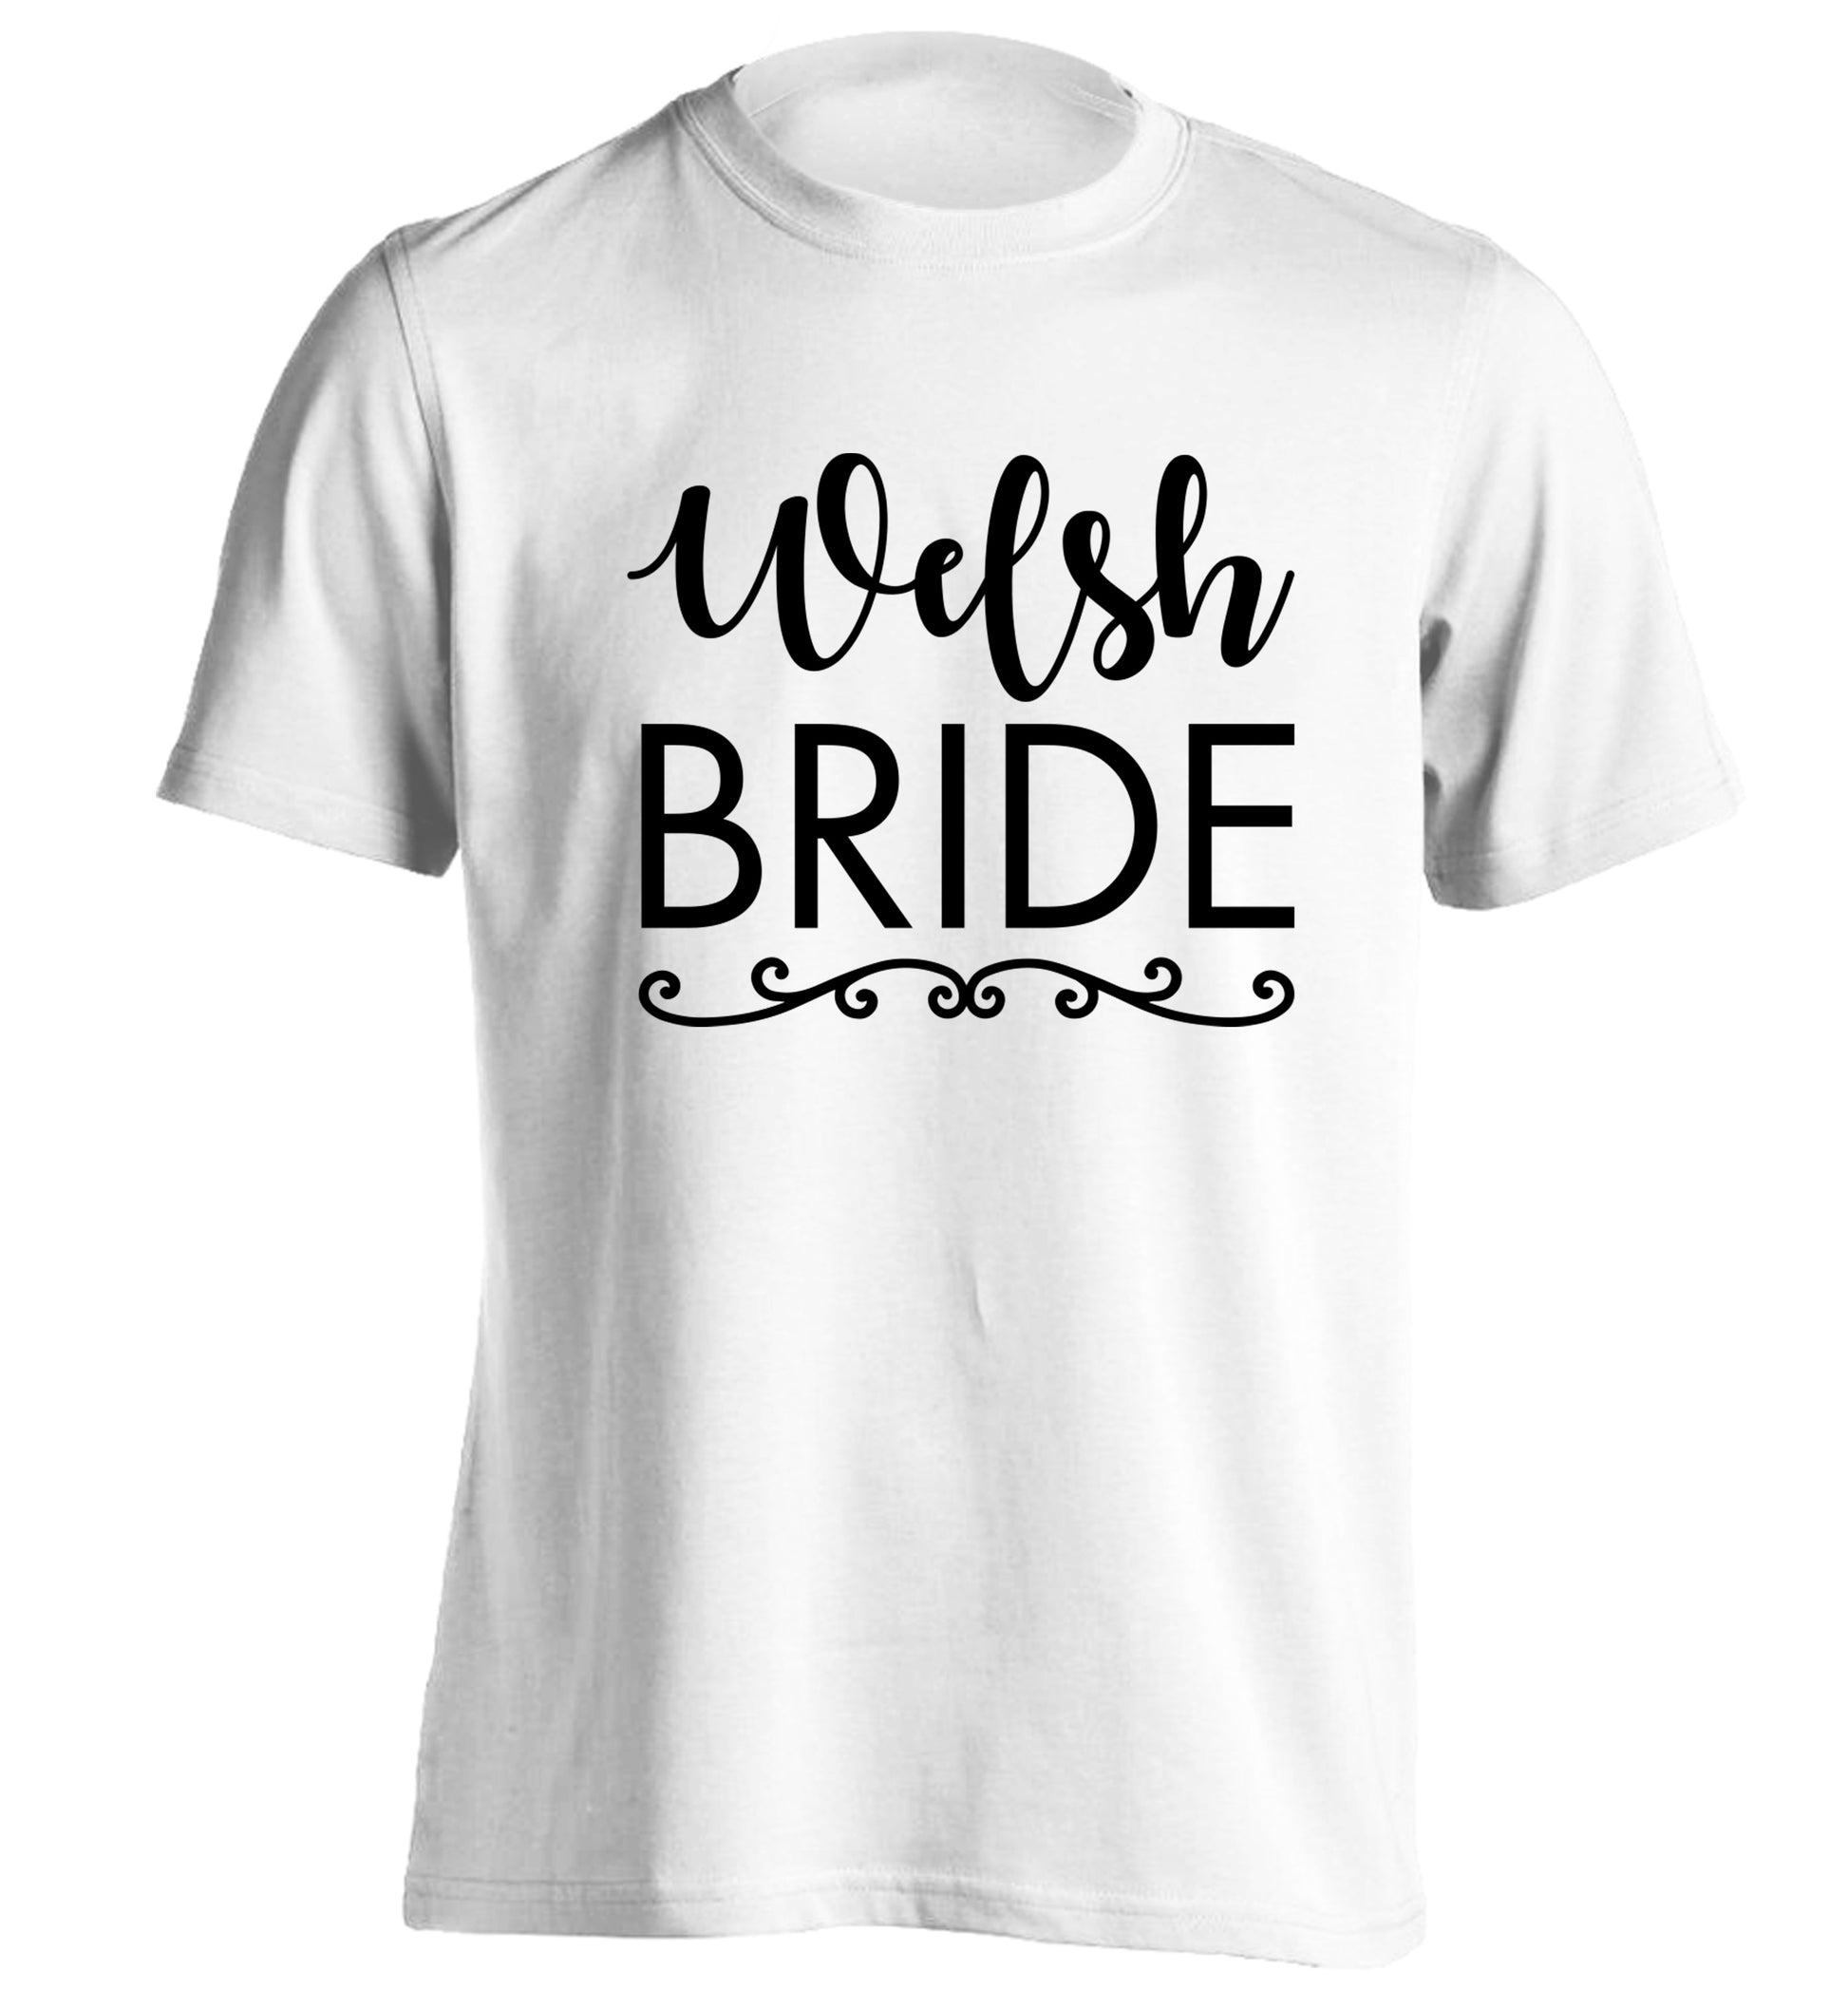 Welsh Bride adults unisex white Tshirt 2XL